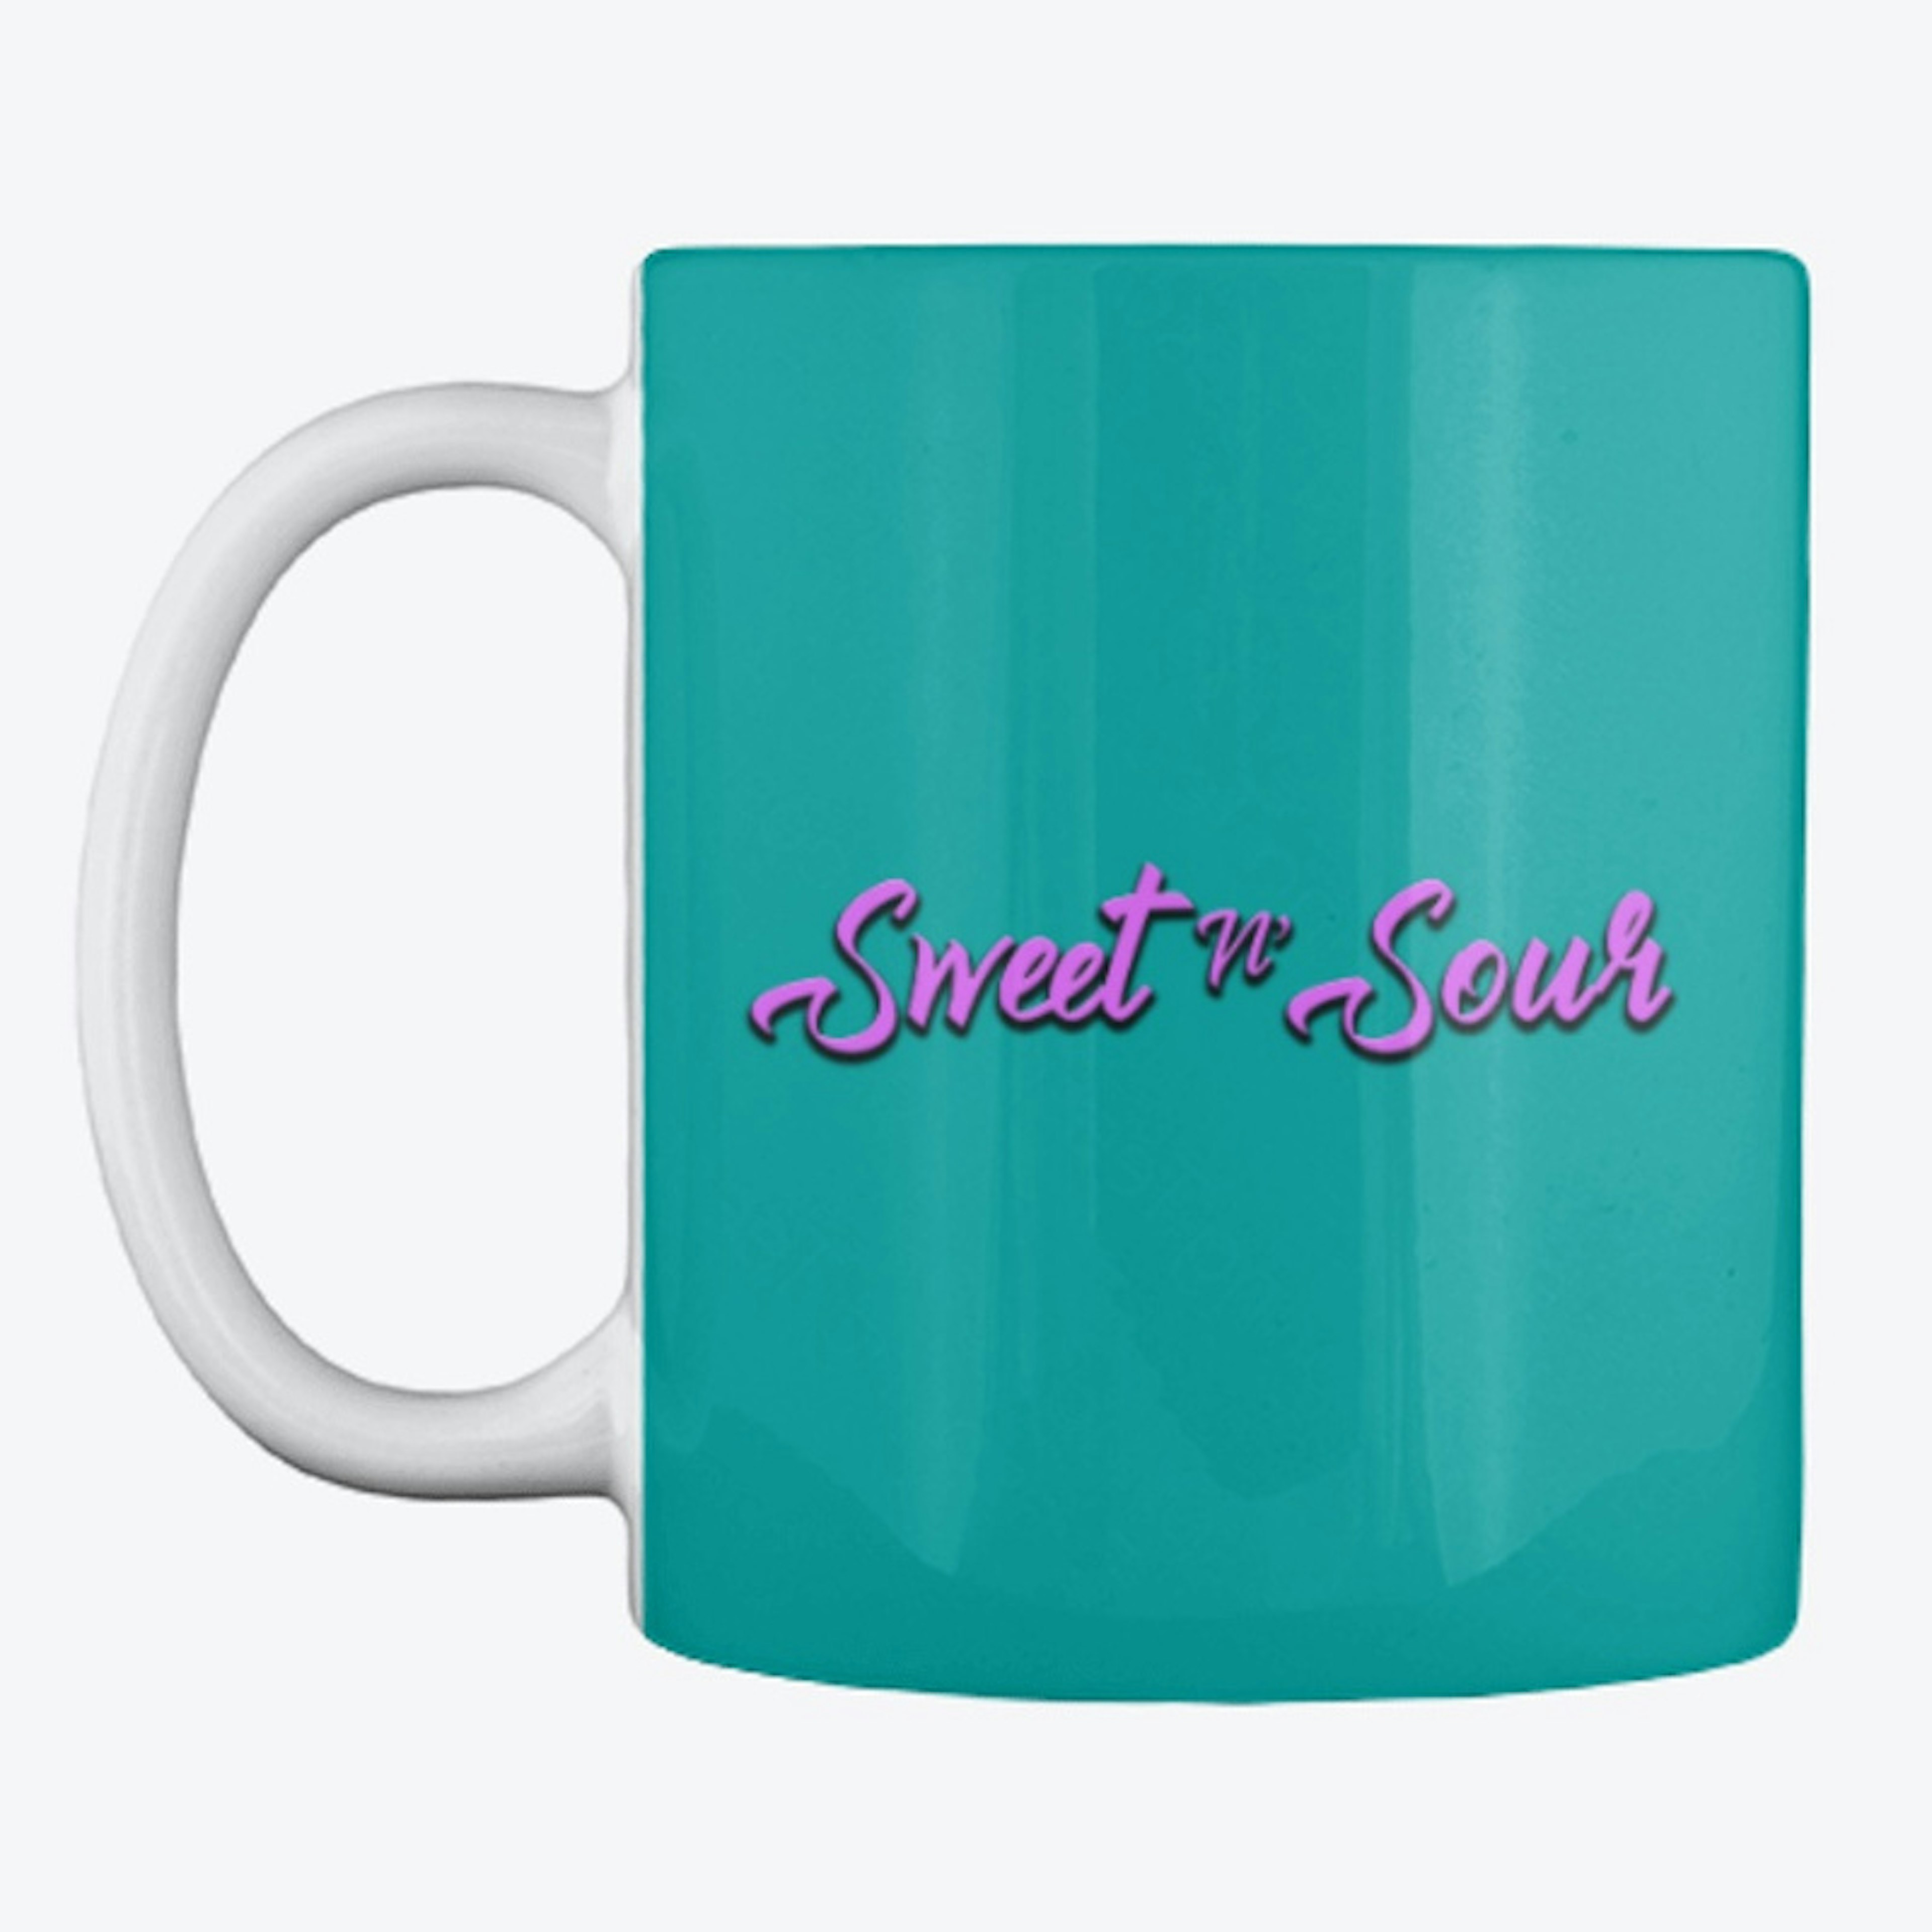 Sweet N' Sour Mug